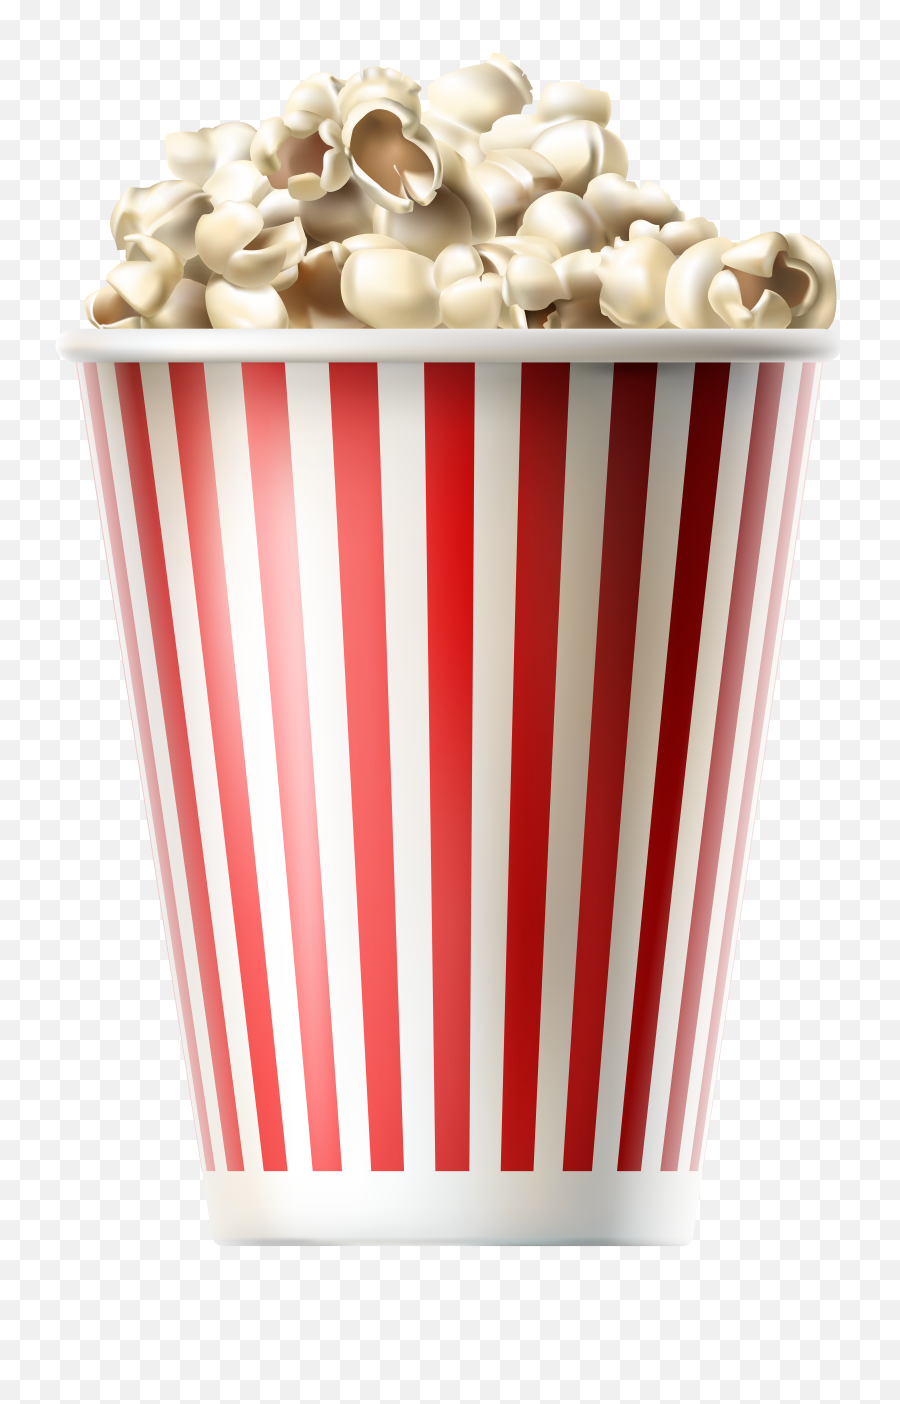 Hd Popcorn Png Image Free Download - Clip Art,Pop Corn Png